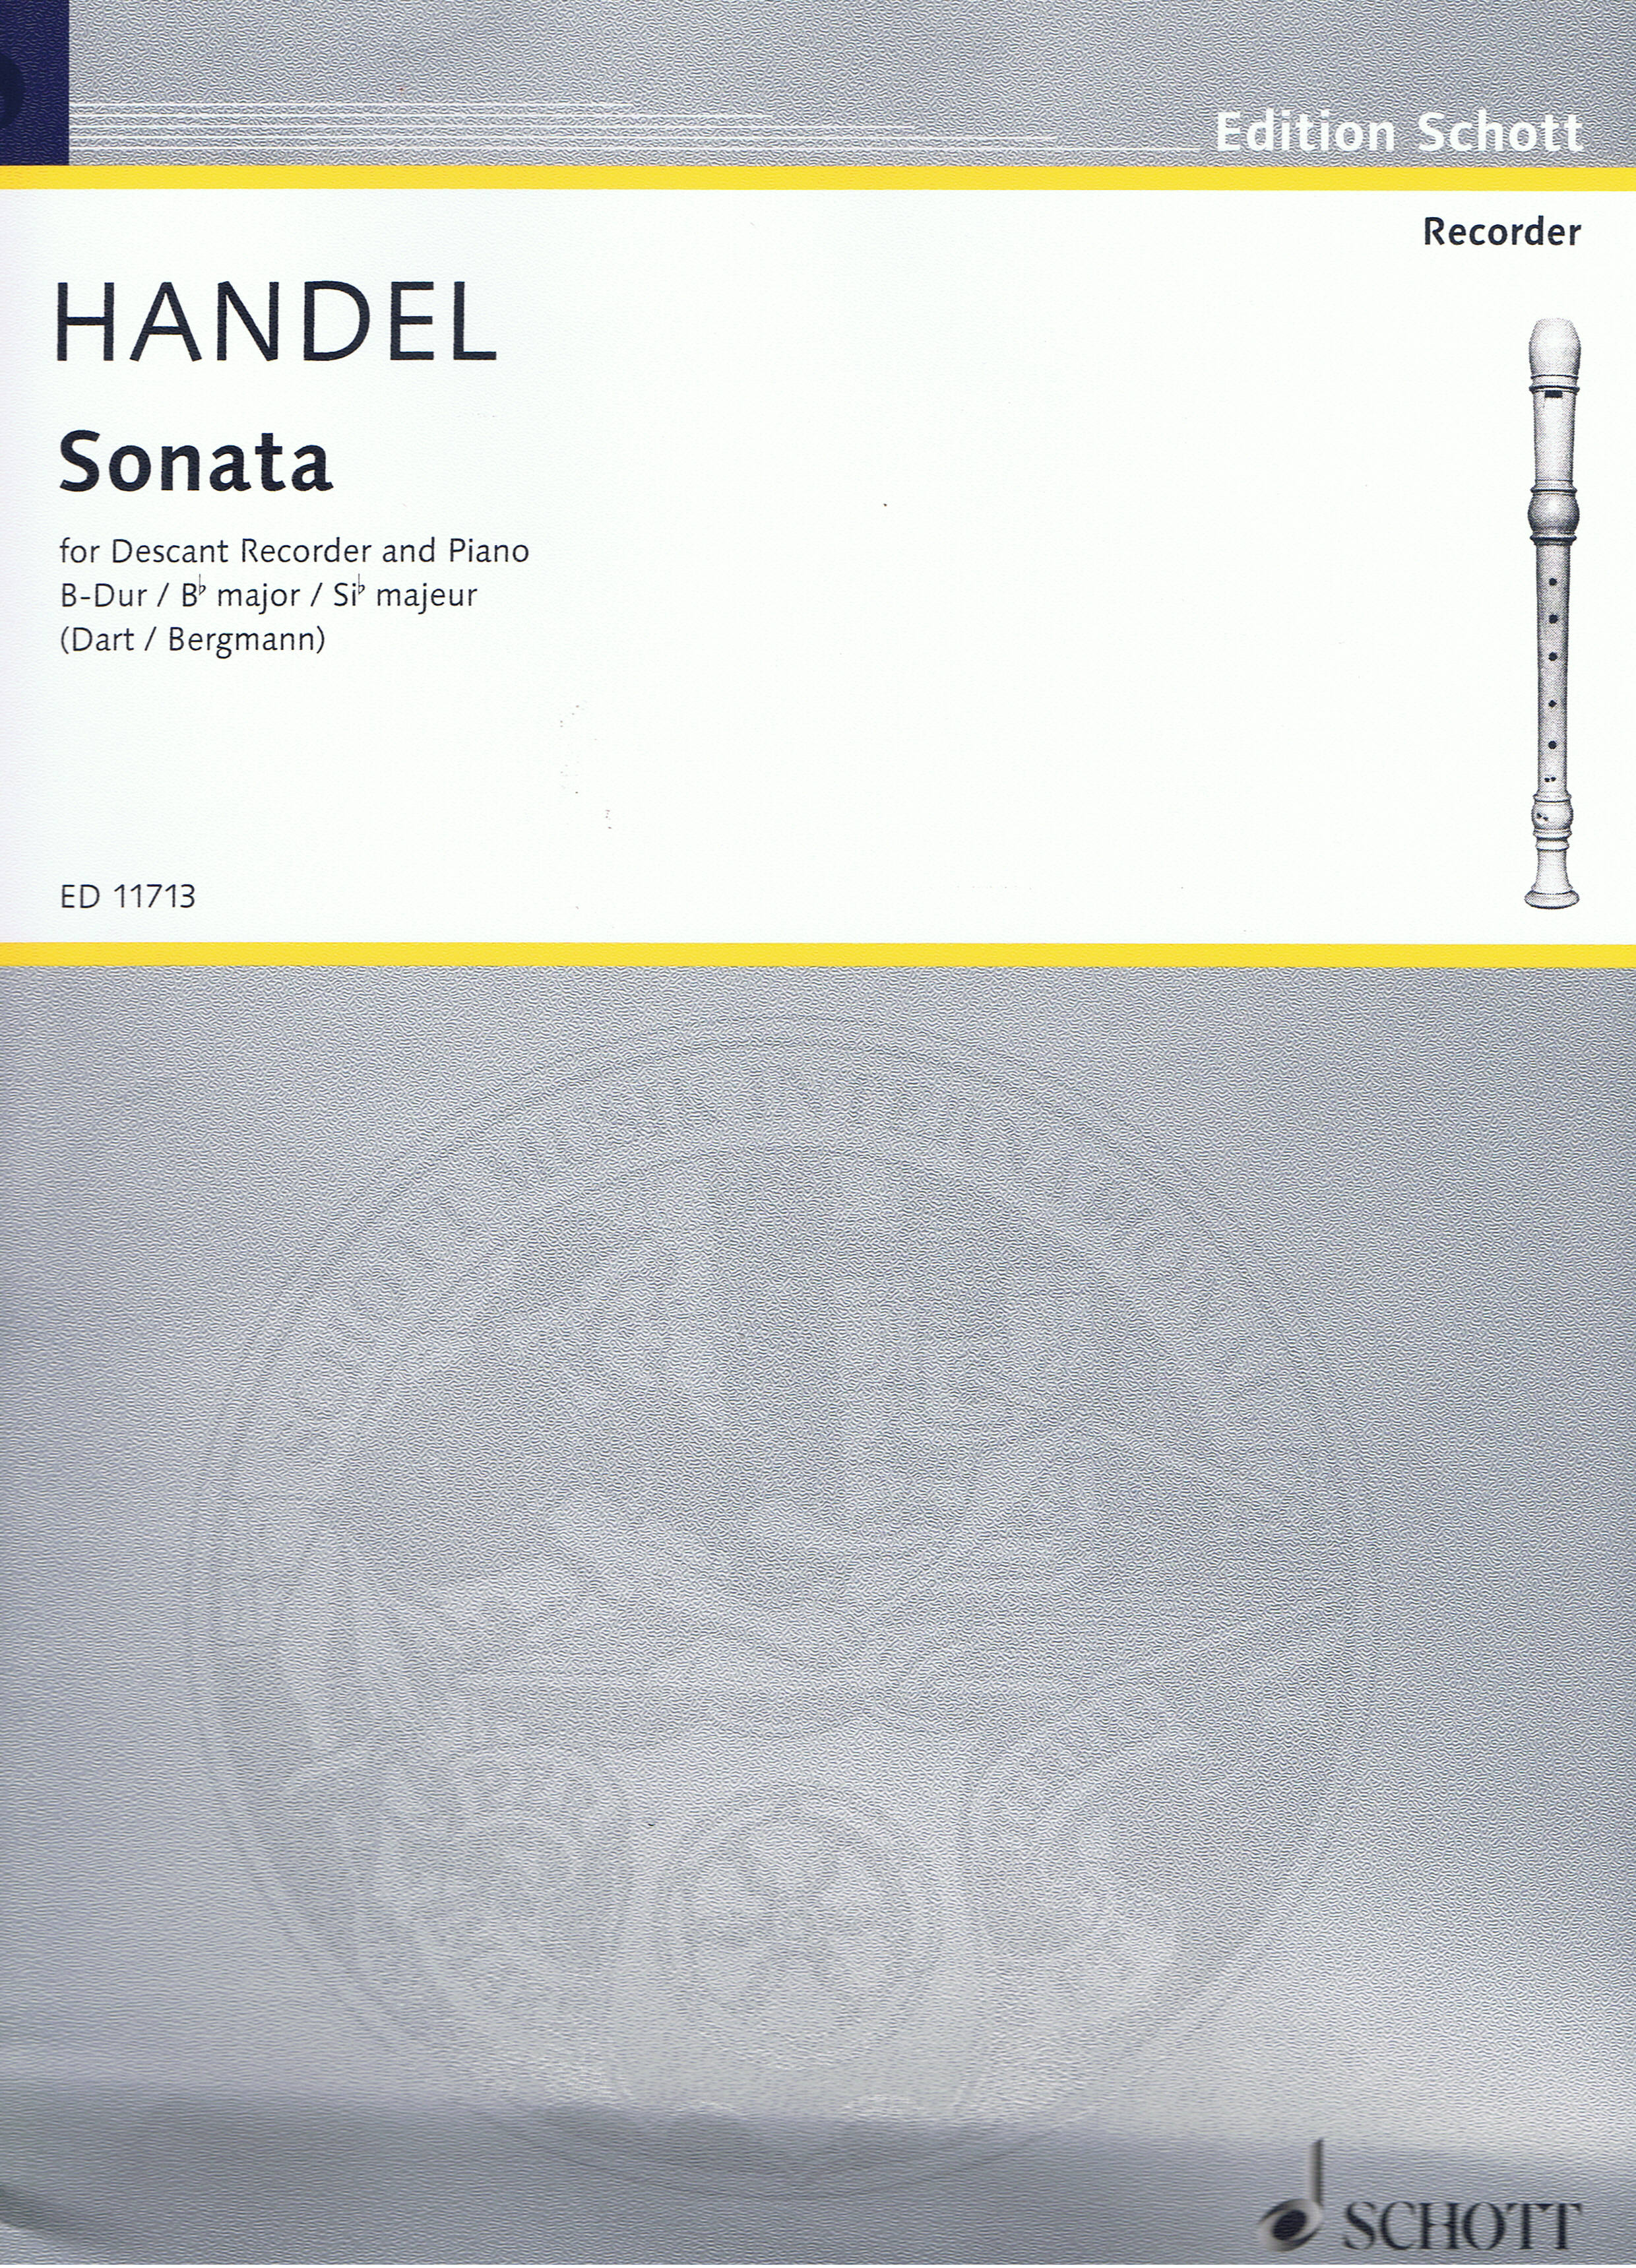 Georg Friedrich Hndel: Sonata in B flat major: Descant Recorder: Score and